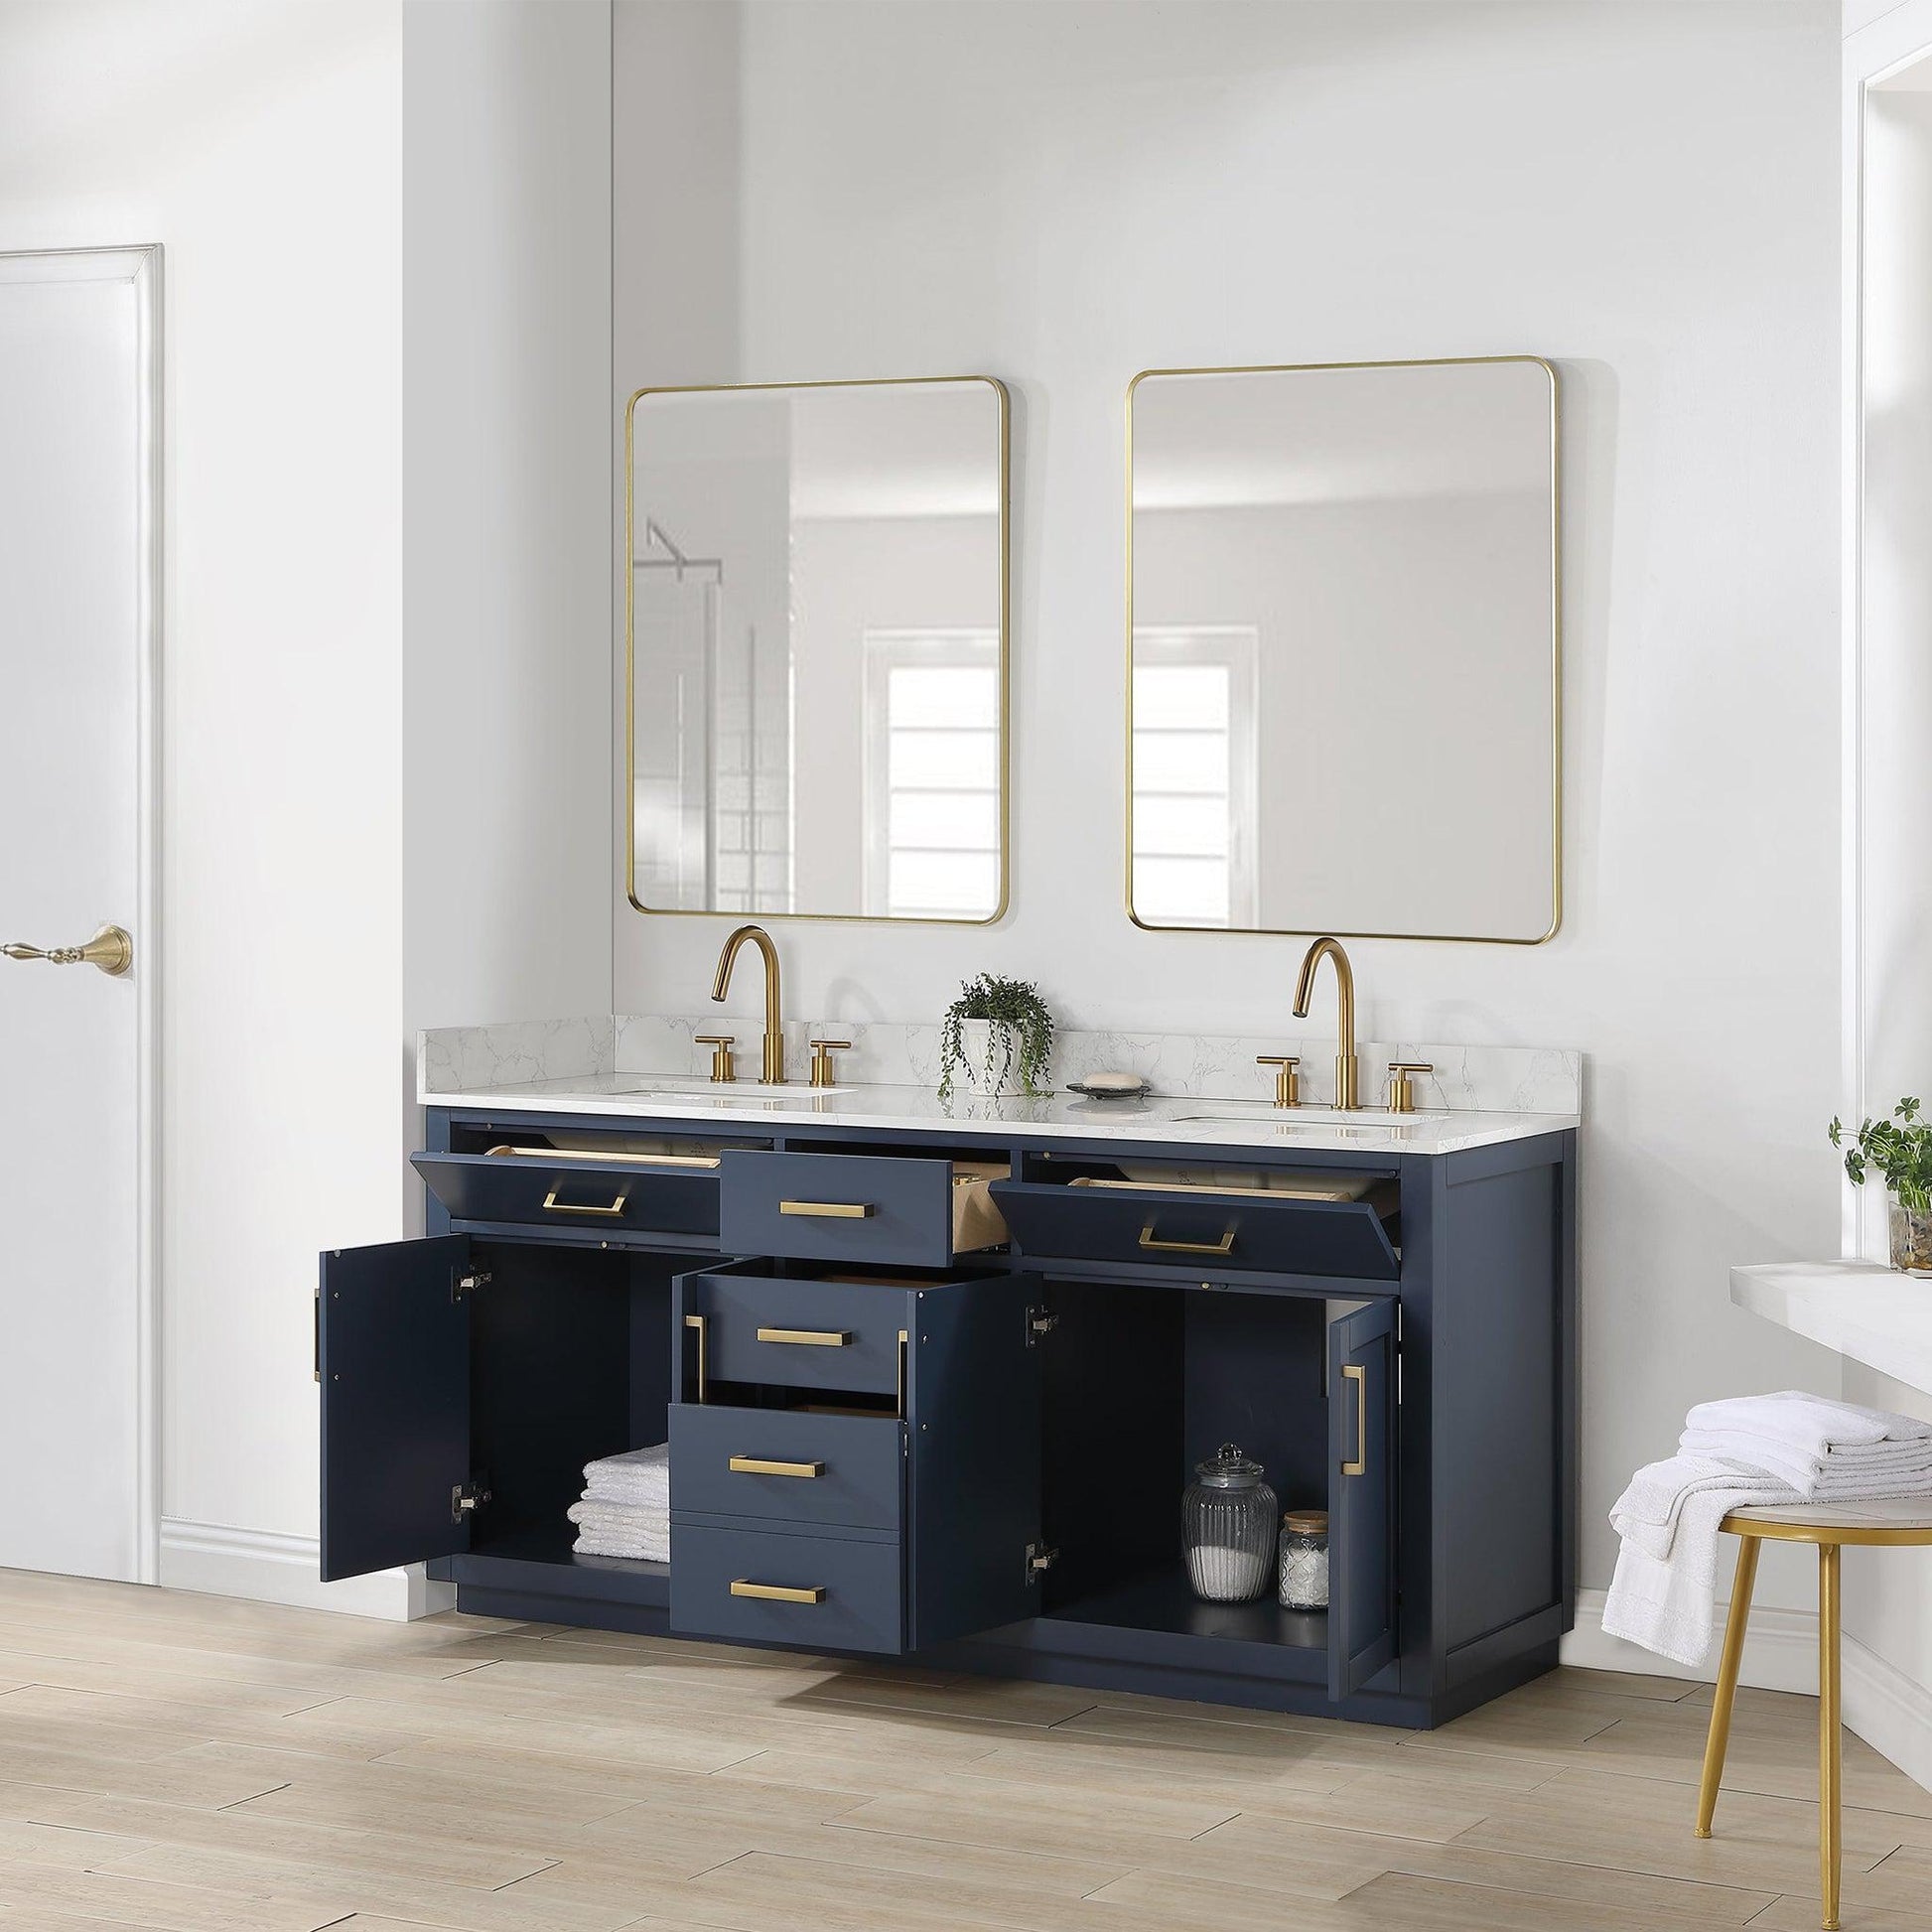 Altair Gavino 72" Royal Blue Freestanding Double Bathroom Vanity Set With Mirror, Grain White Composite Stone Top, Single Rectangular Undermount Ceramic Sink, Overflow, Sidesplash, and Backsplash